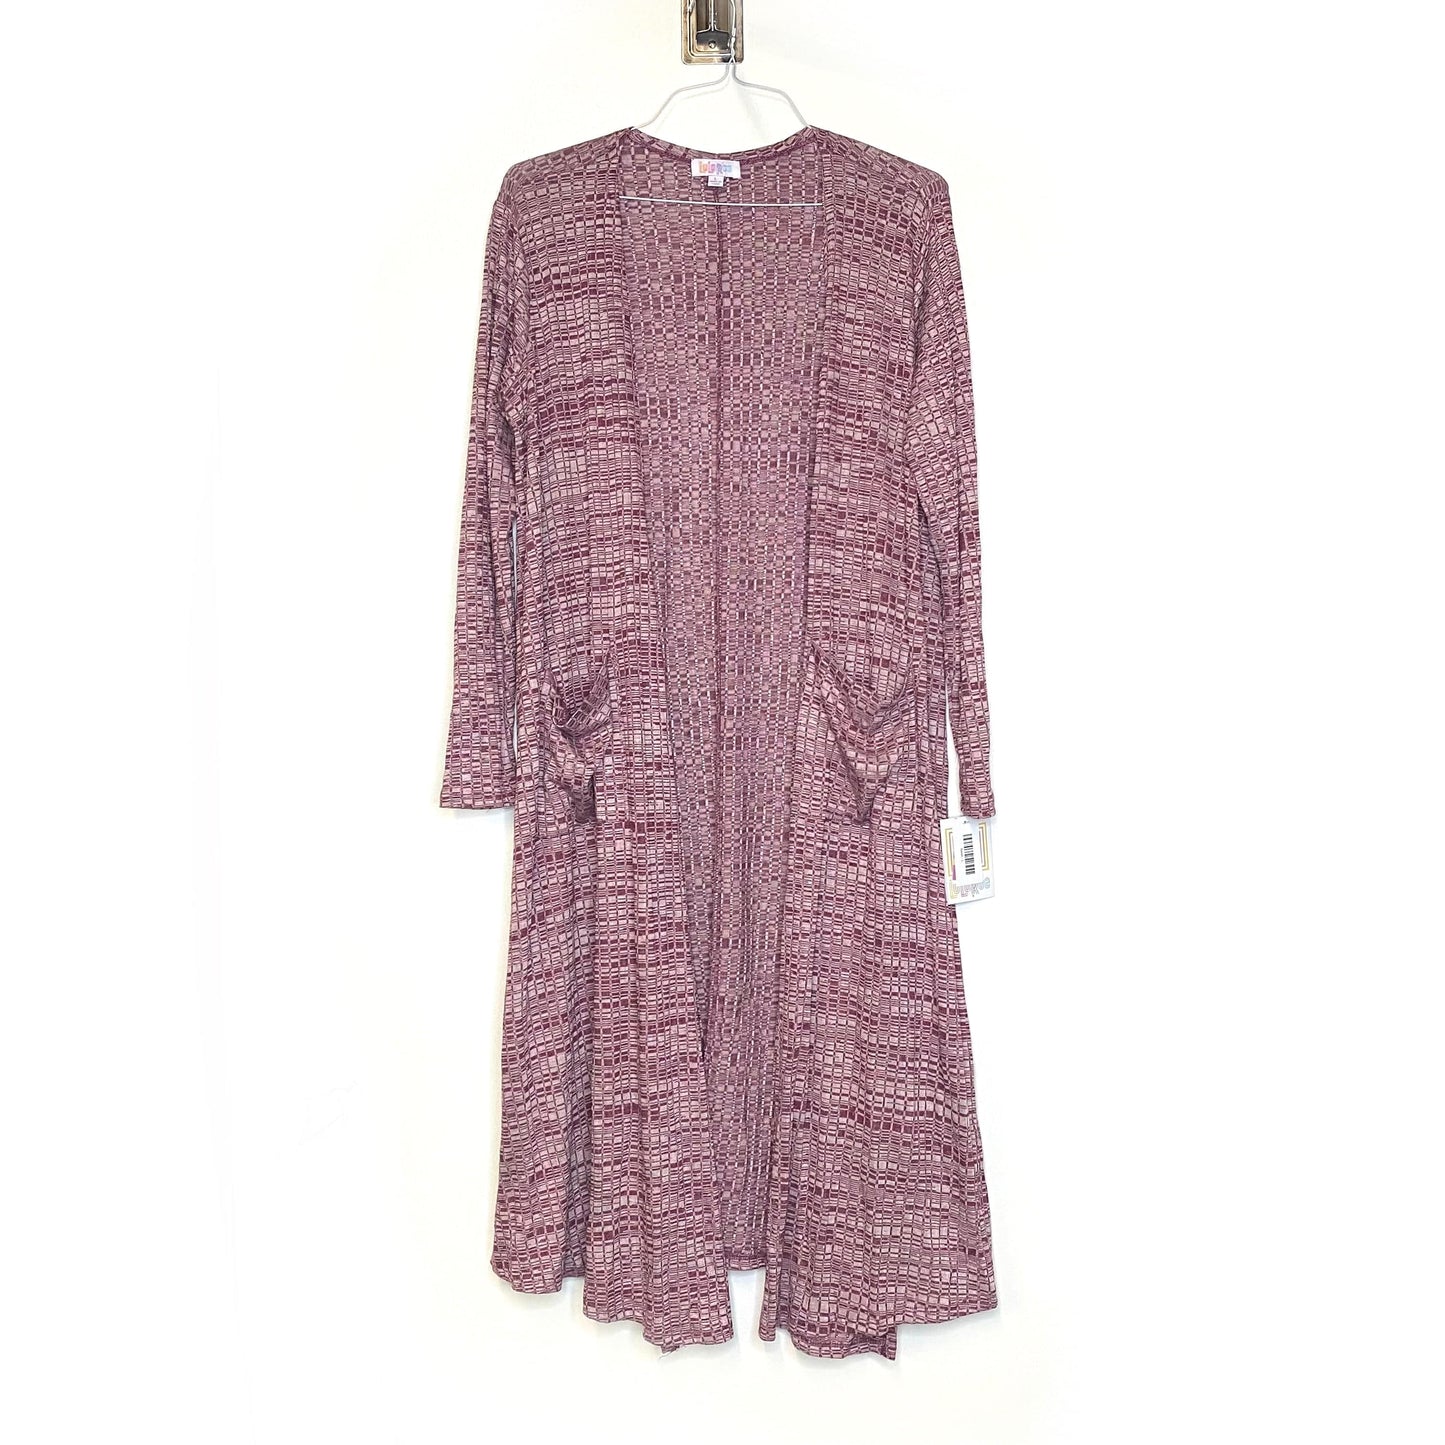 LuLaRoe Womens Size L Rosewood Purple Sarah Duster Sweater L/s NWT